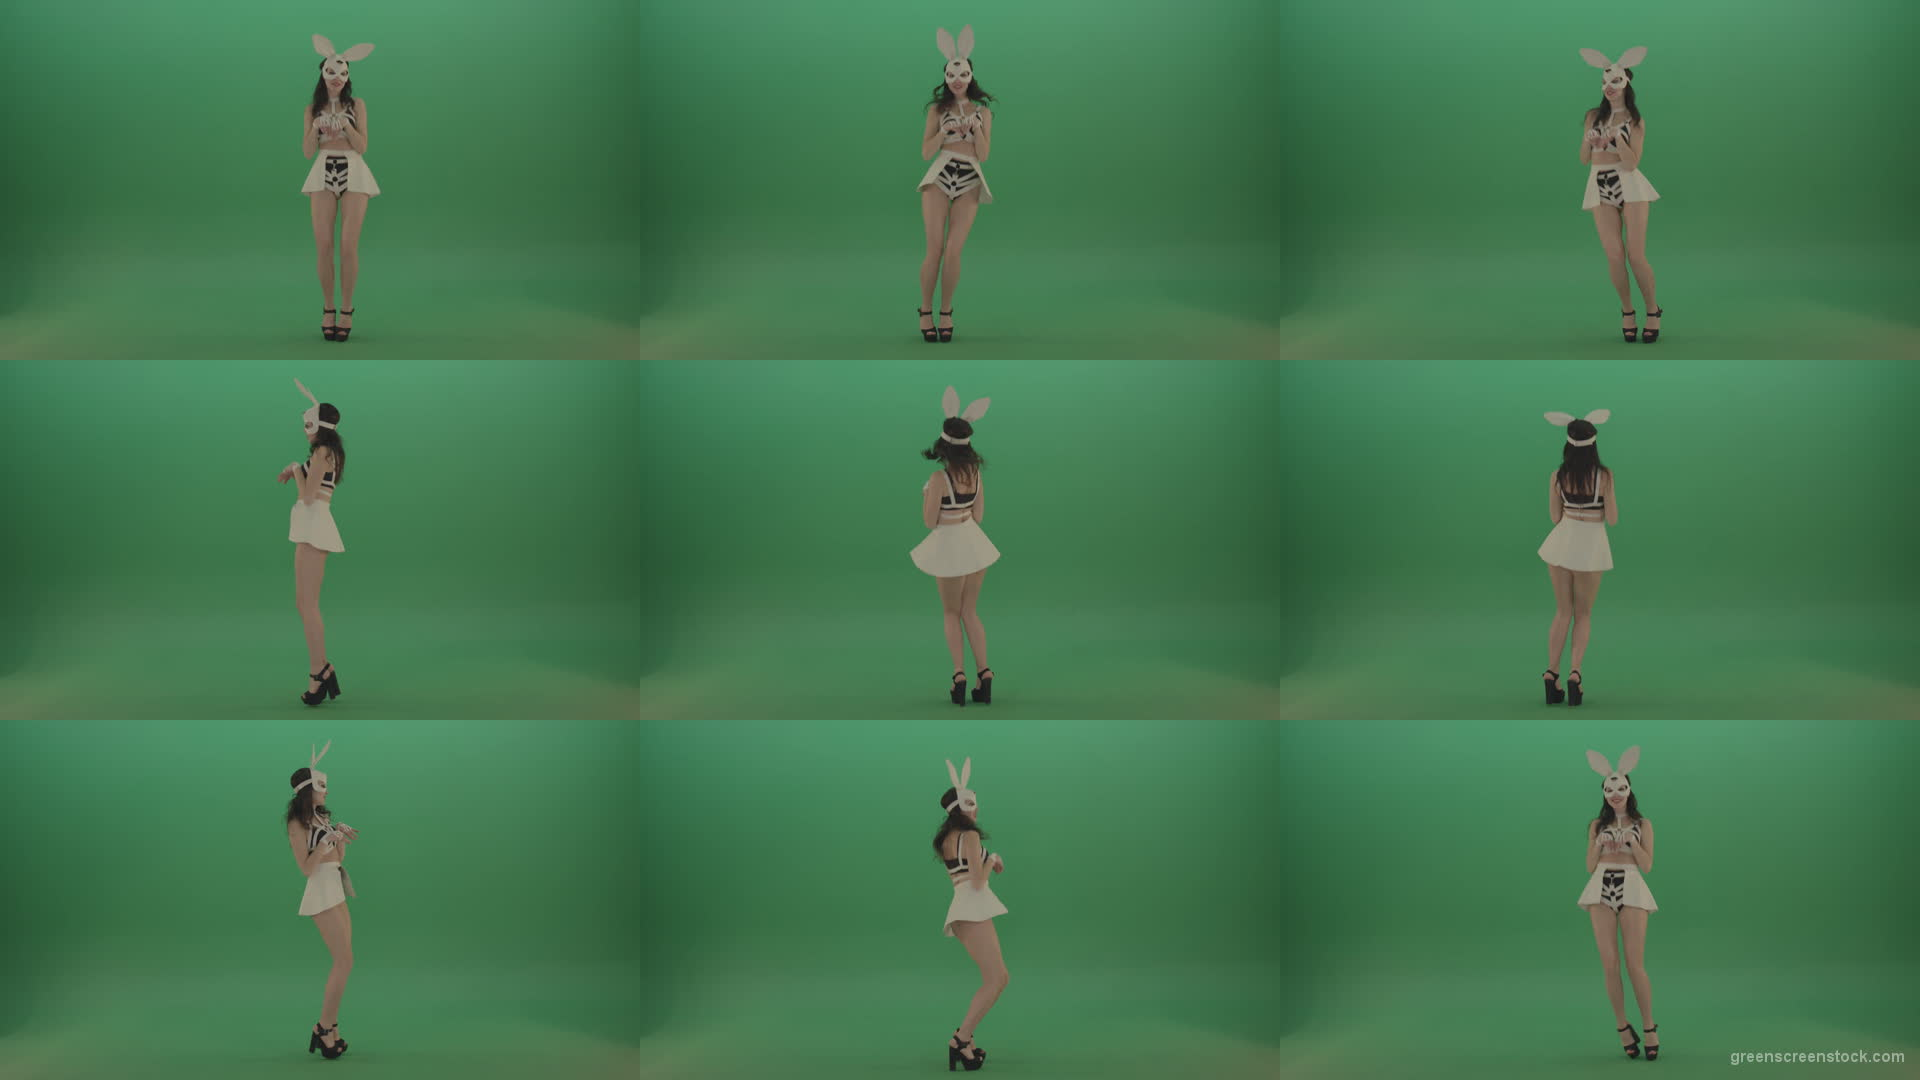 Rotating-jumping-rabbit-dancing-go-go-Girl-over-Green-Screen-1920 Green Screen Stock